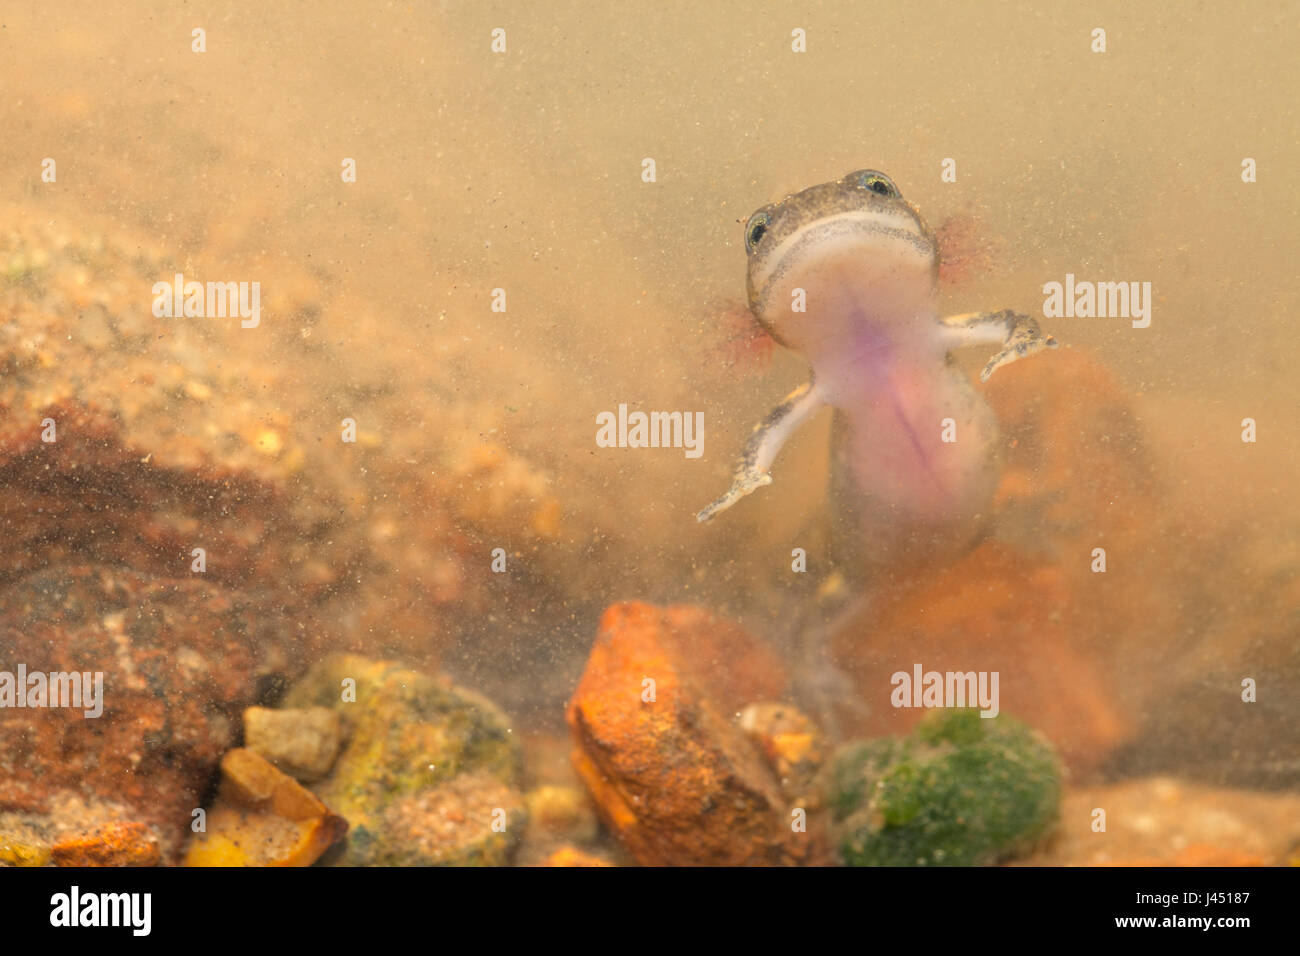 Les larves de salamandres de feu sous l'eau Banque D'Images